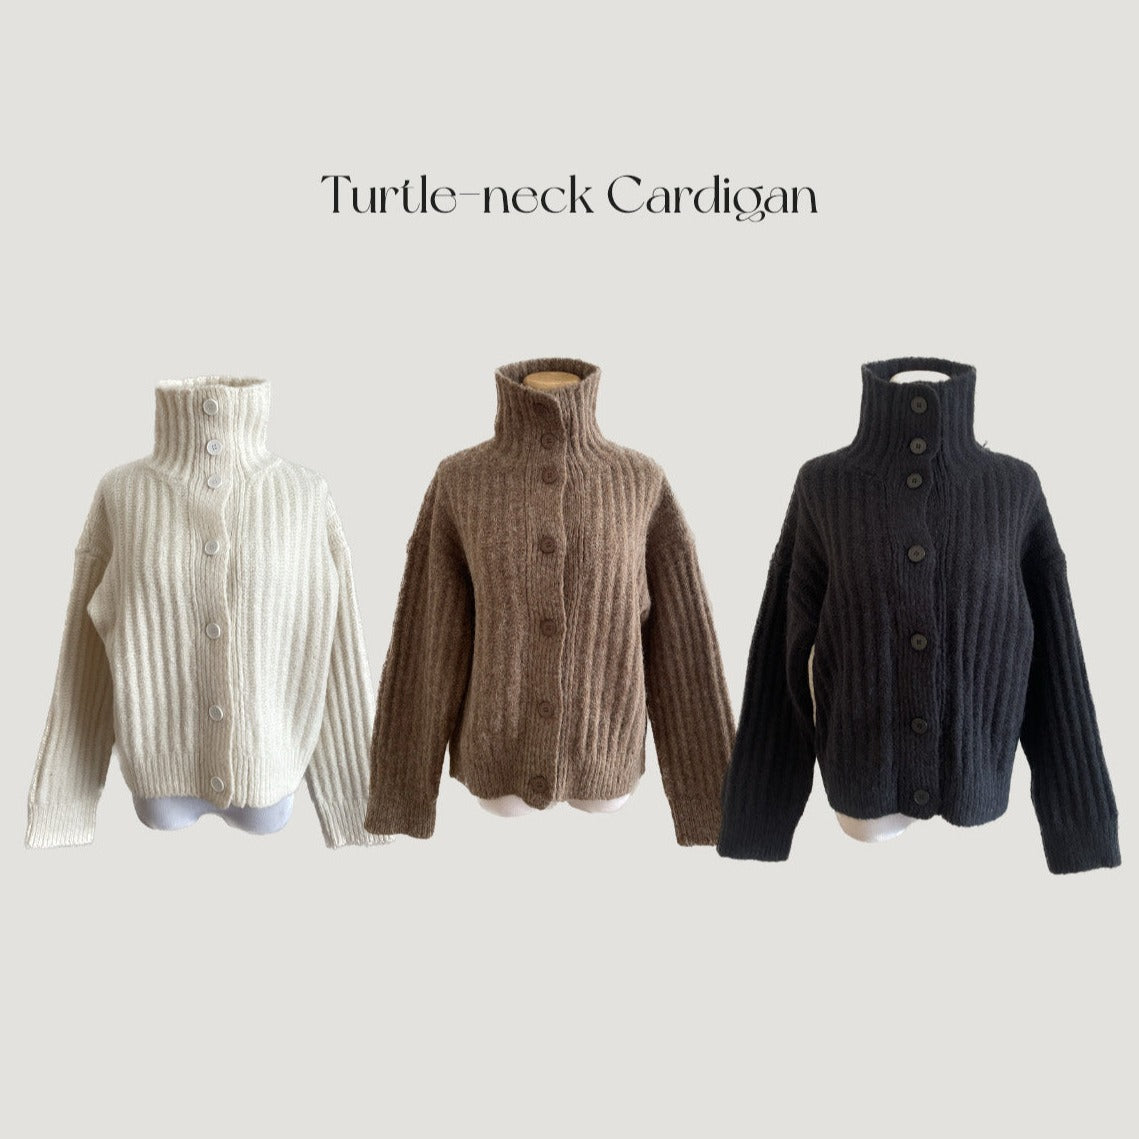 Turtle-neck Cardigan